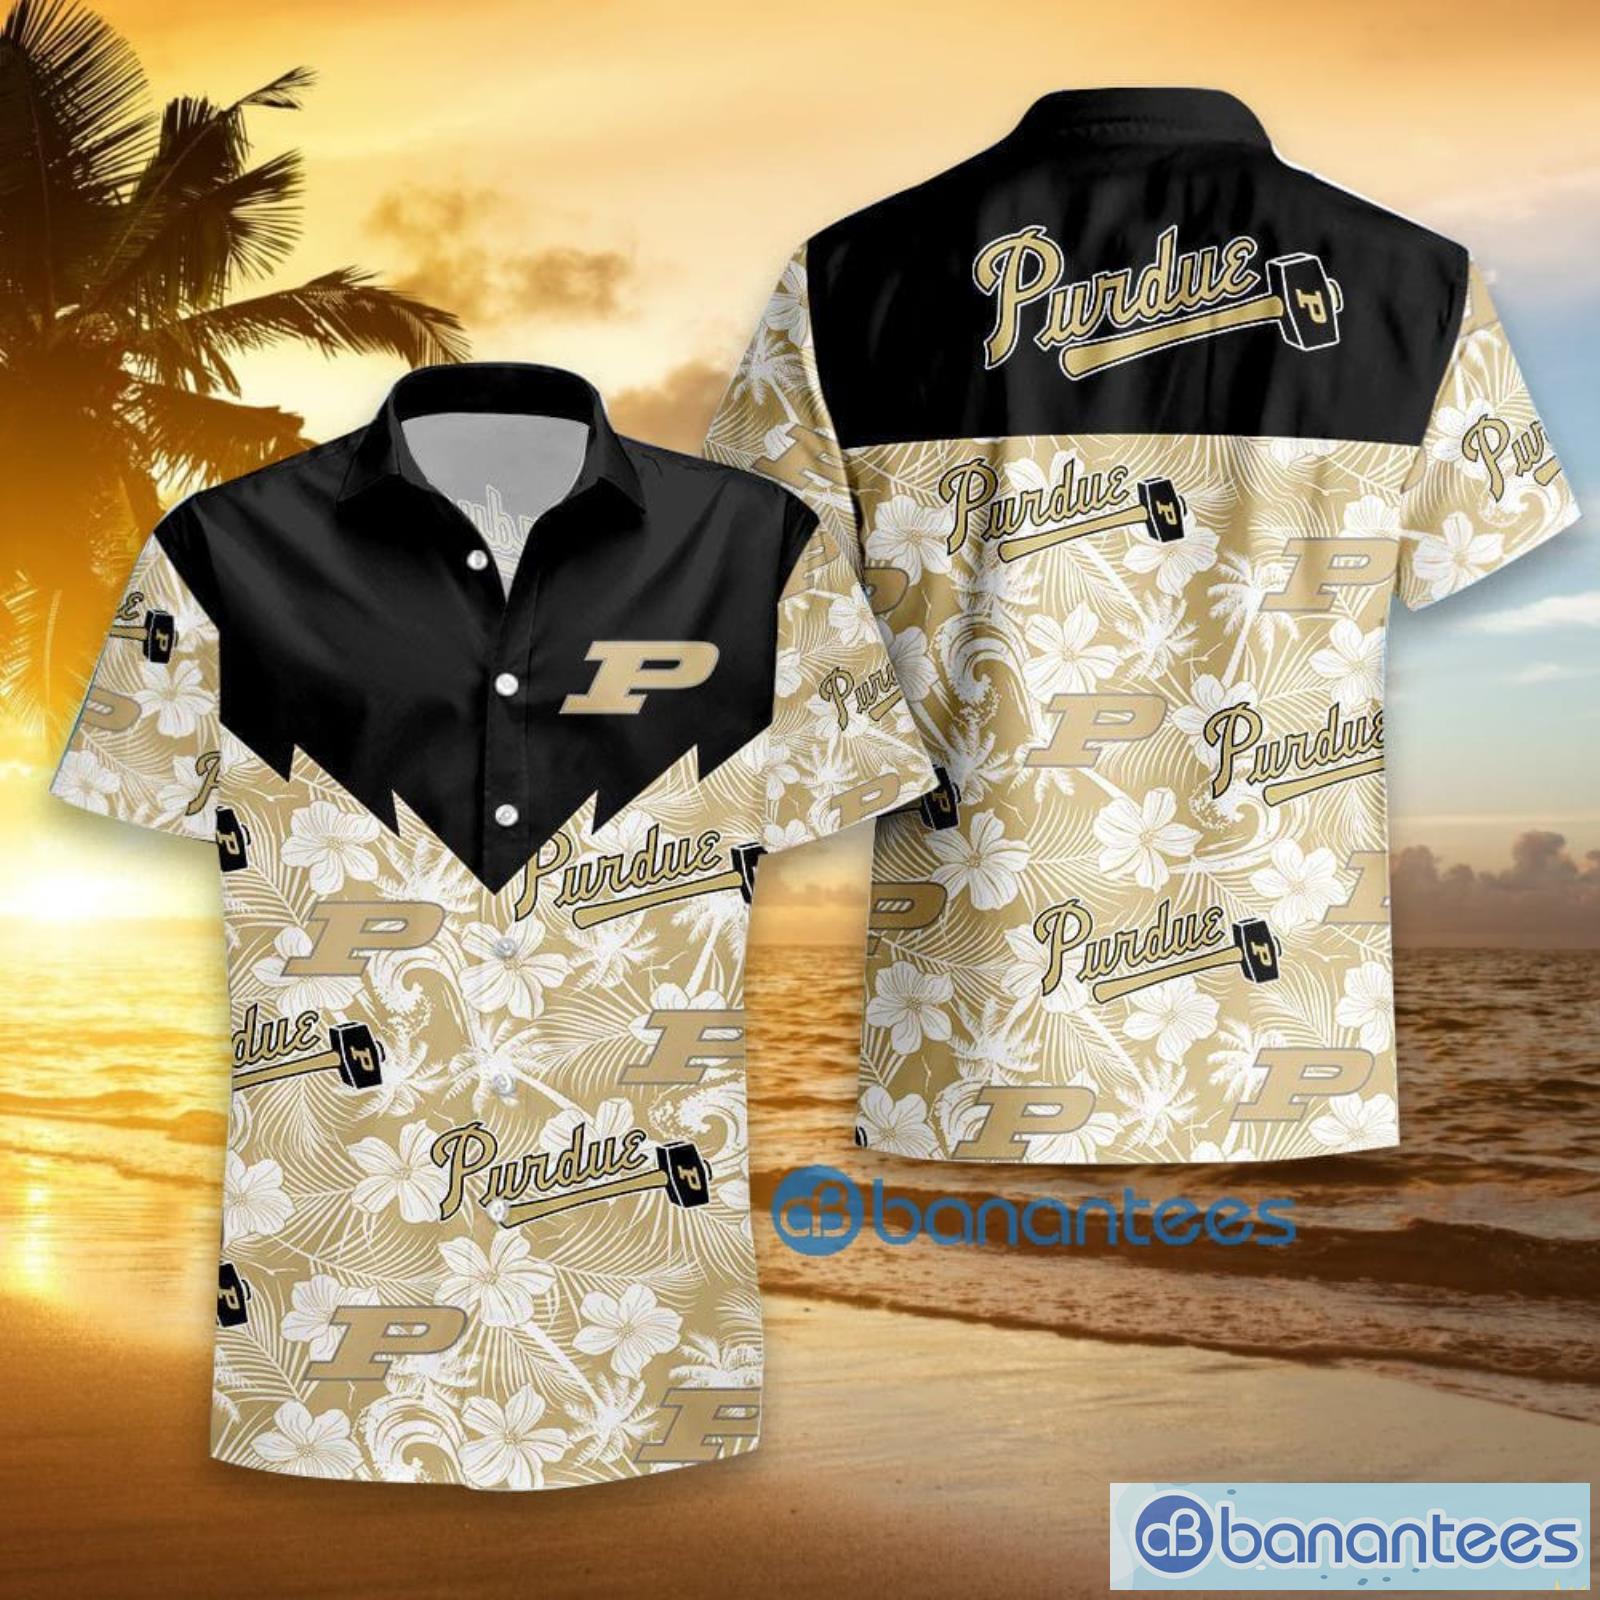 Boston Celtics Lover National Basketball Association 2023 Summer Gift Aloha  Hawaiian Shirt - Freedomdesign